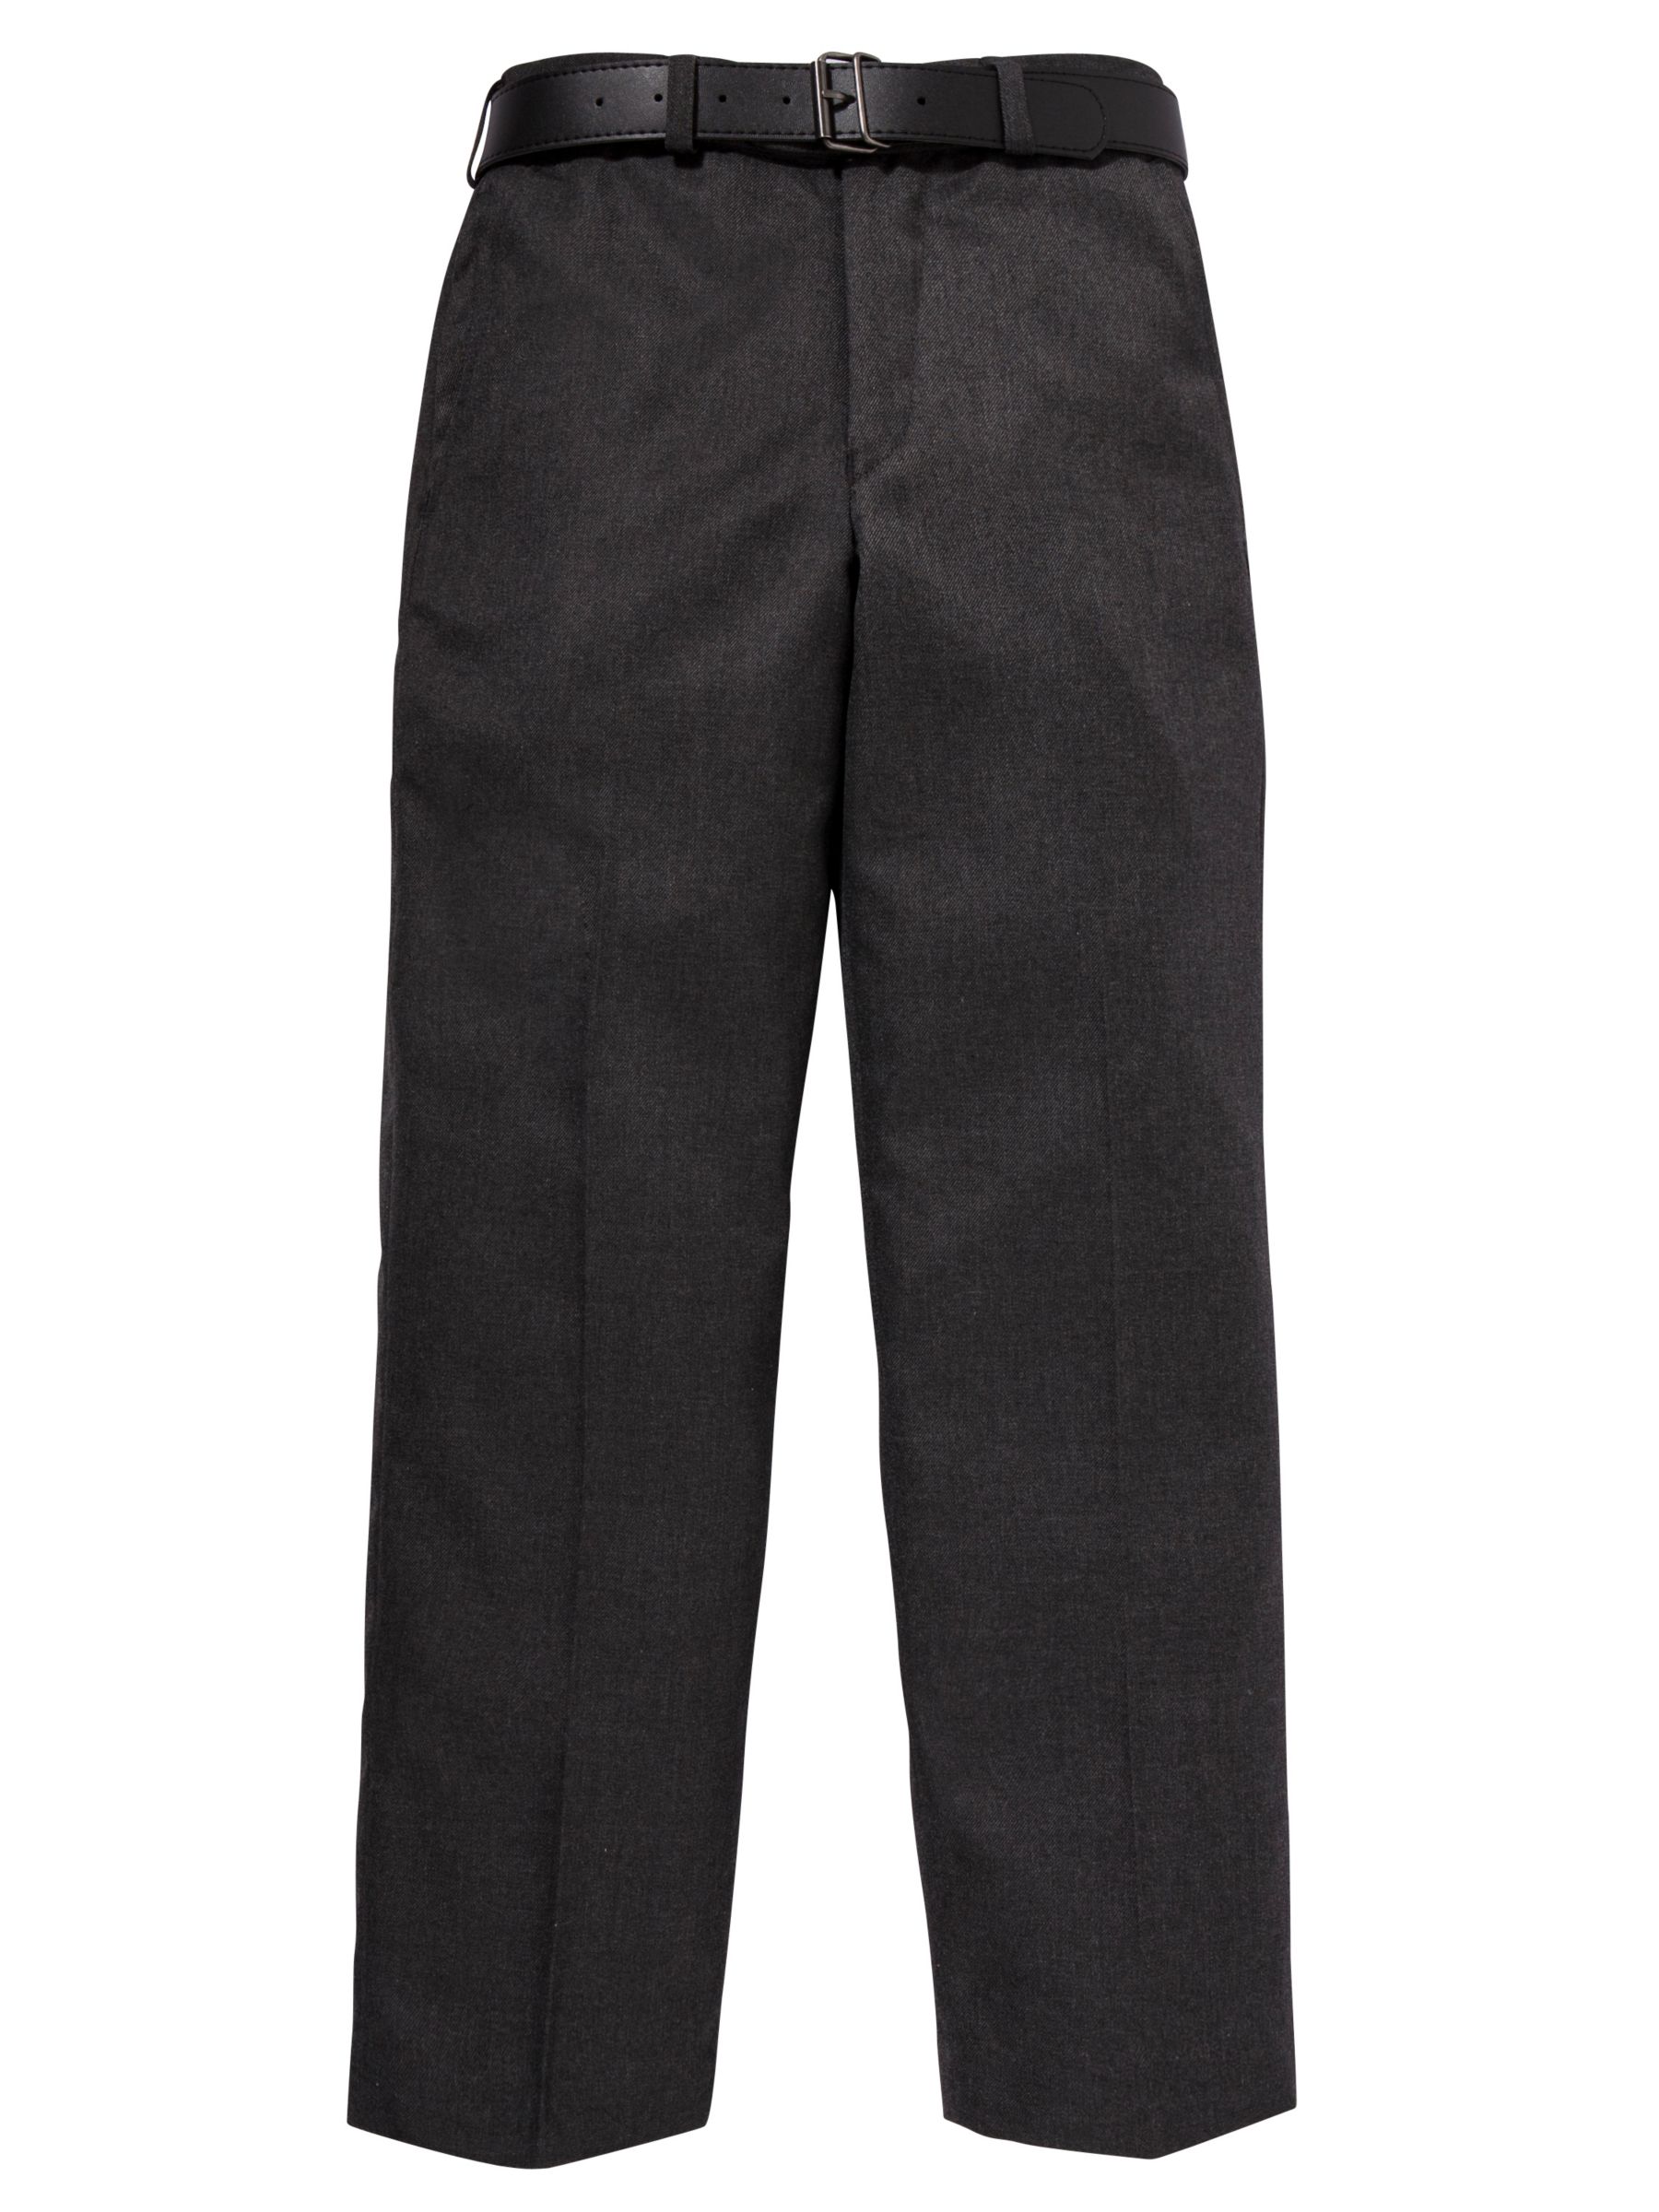 David Luke Senior Regular Fit Eco-Trousers with Belt, Grey